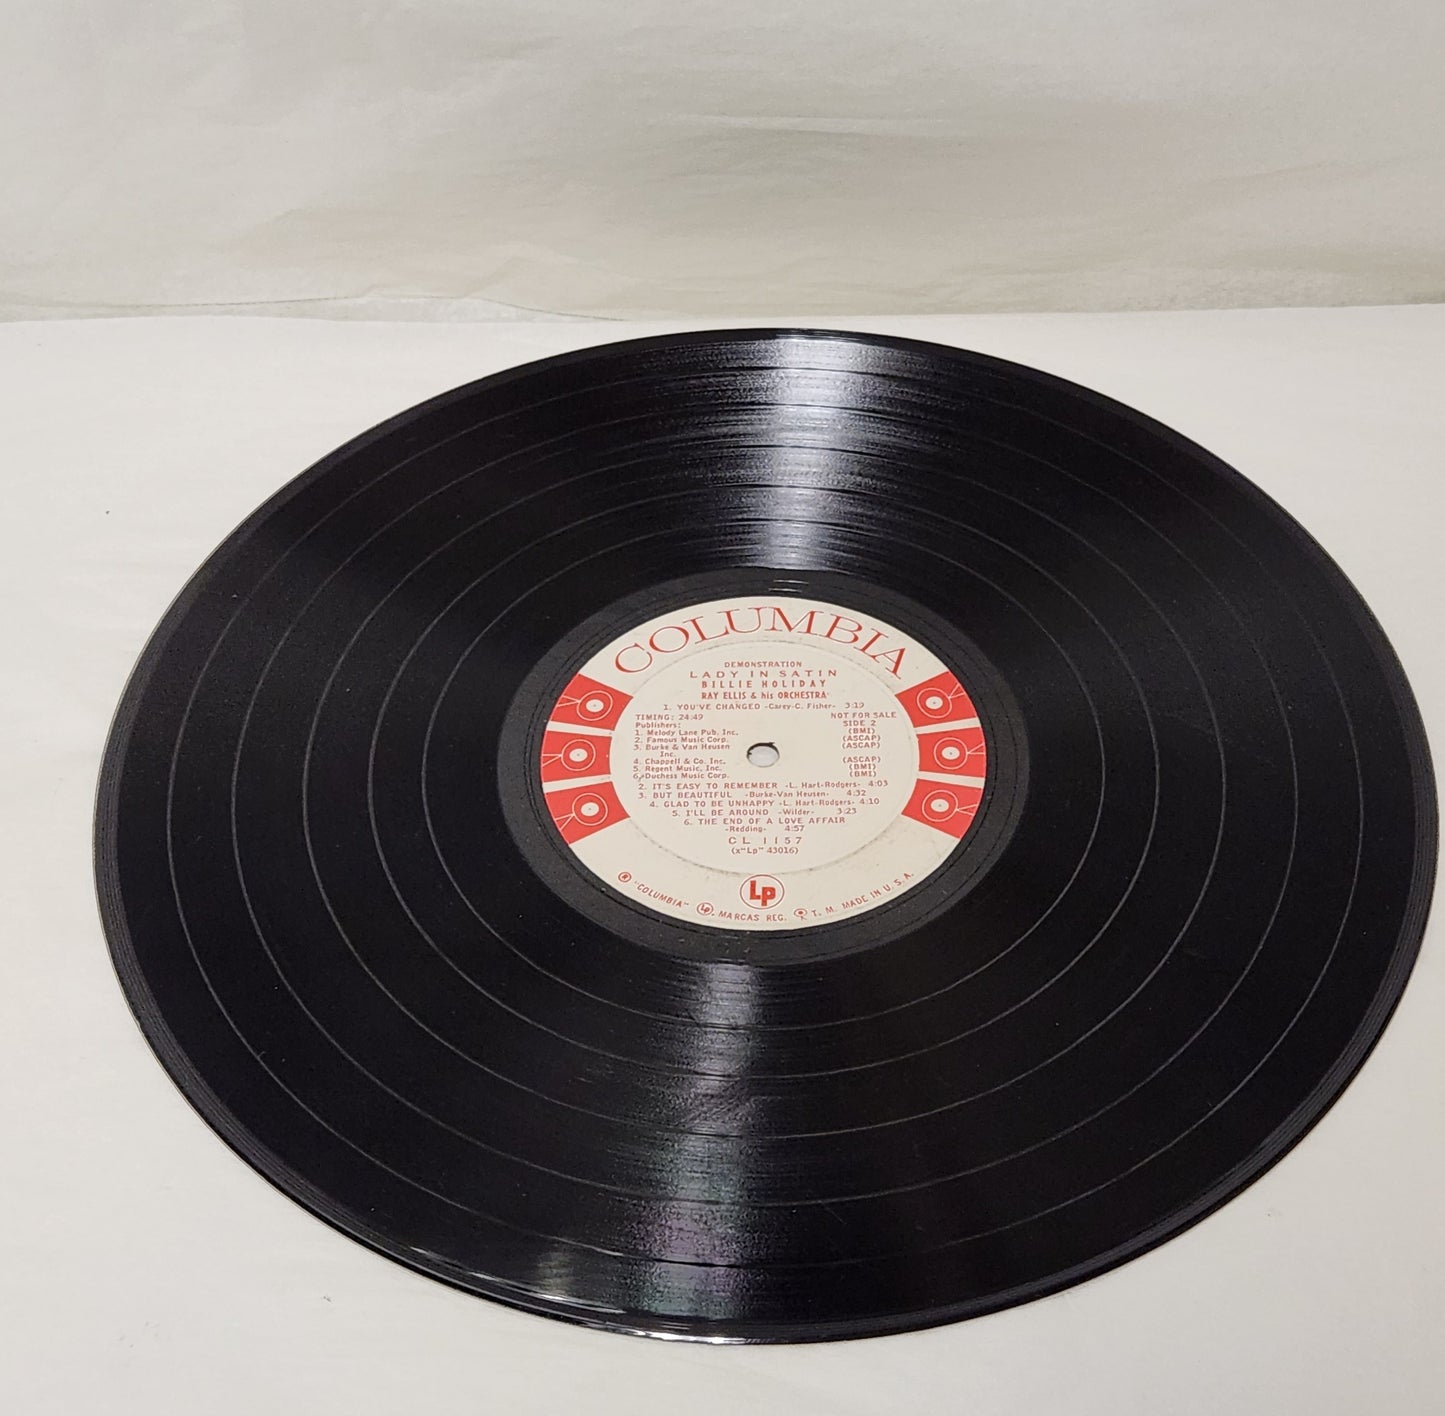 Billie Holiday "Lady In Satin" 1958 Promo Jazz Record Album